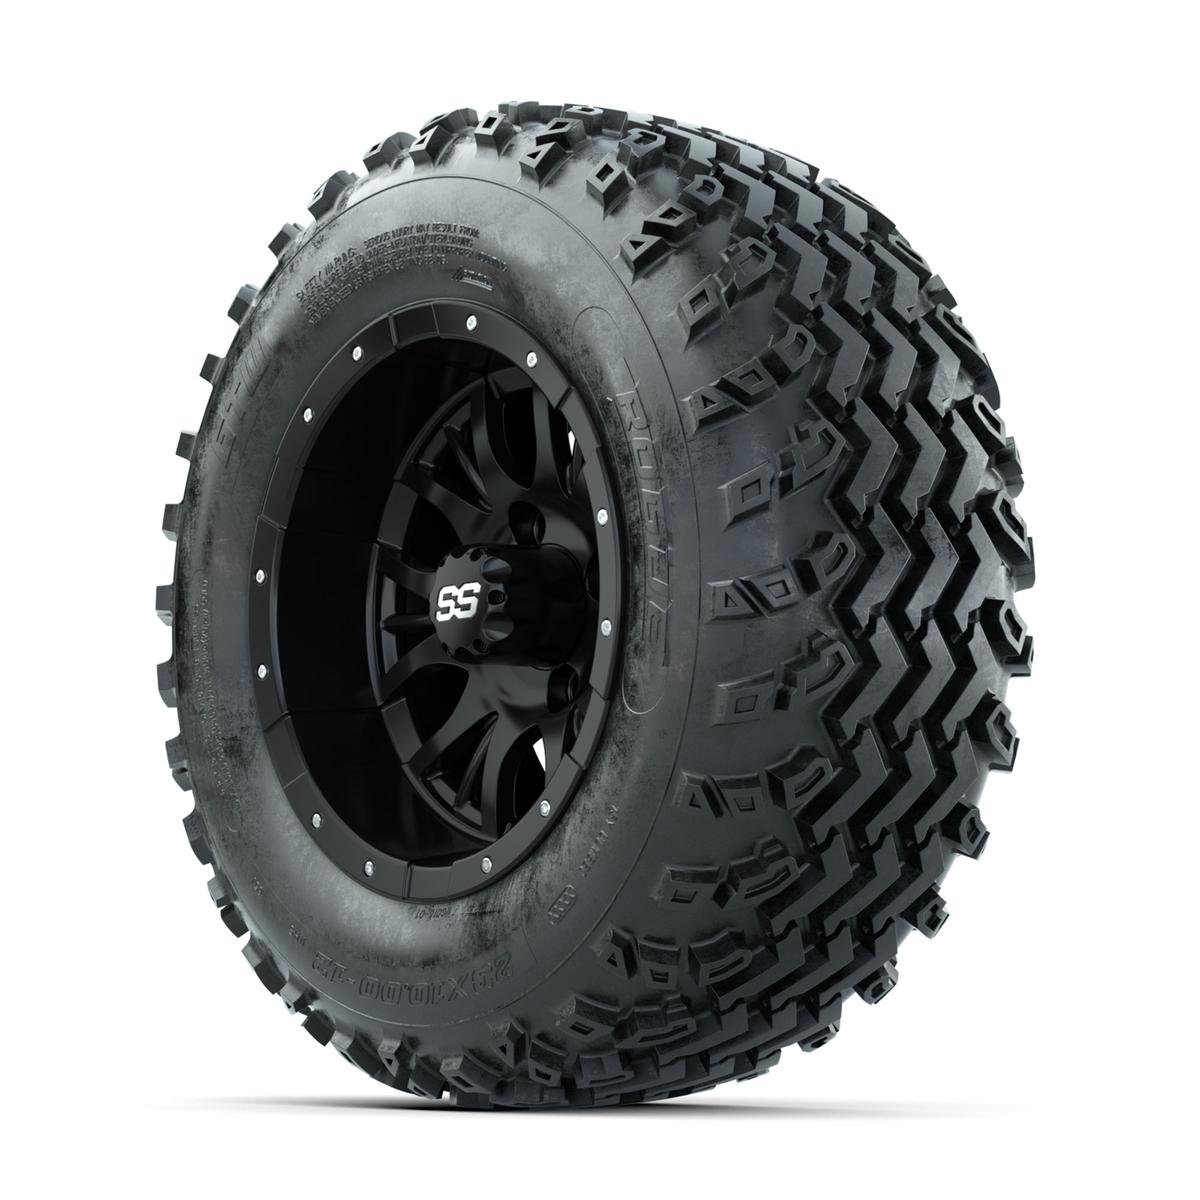 GTW Diesel Matte Black 12 in Wheels with 23x10.00-12 Rogue All Terrain Tires – Full Set